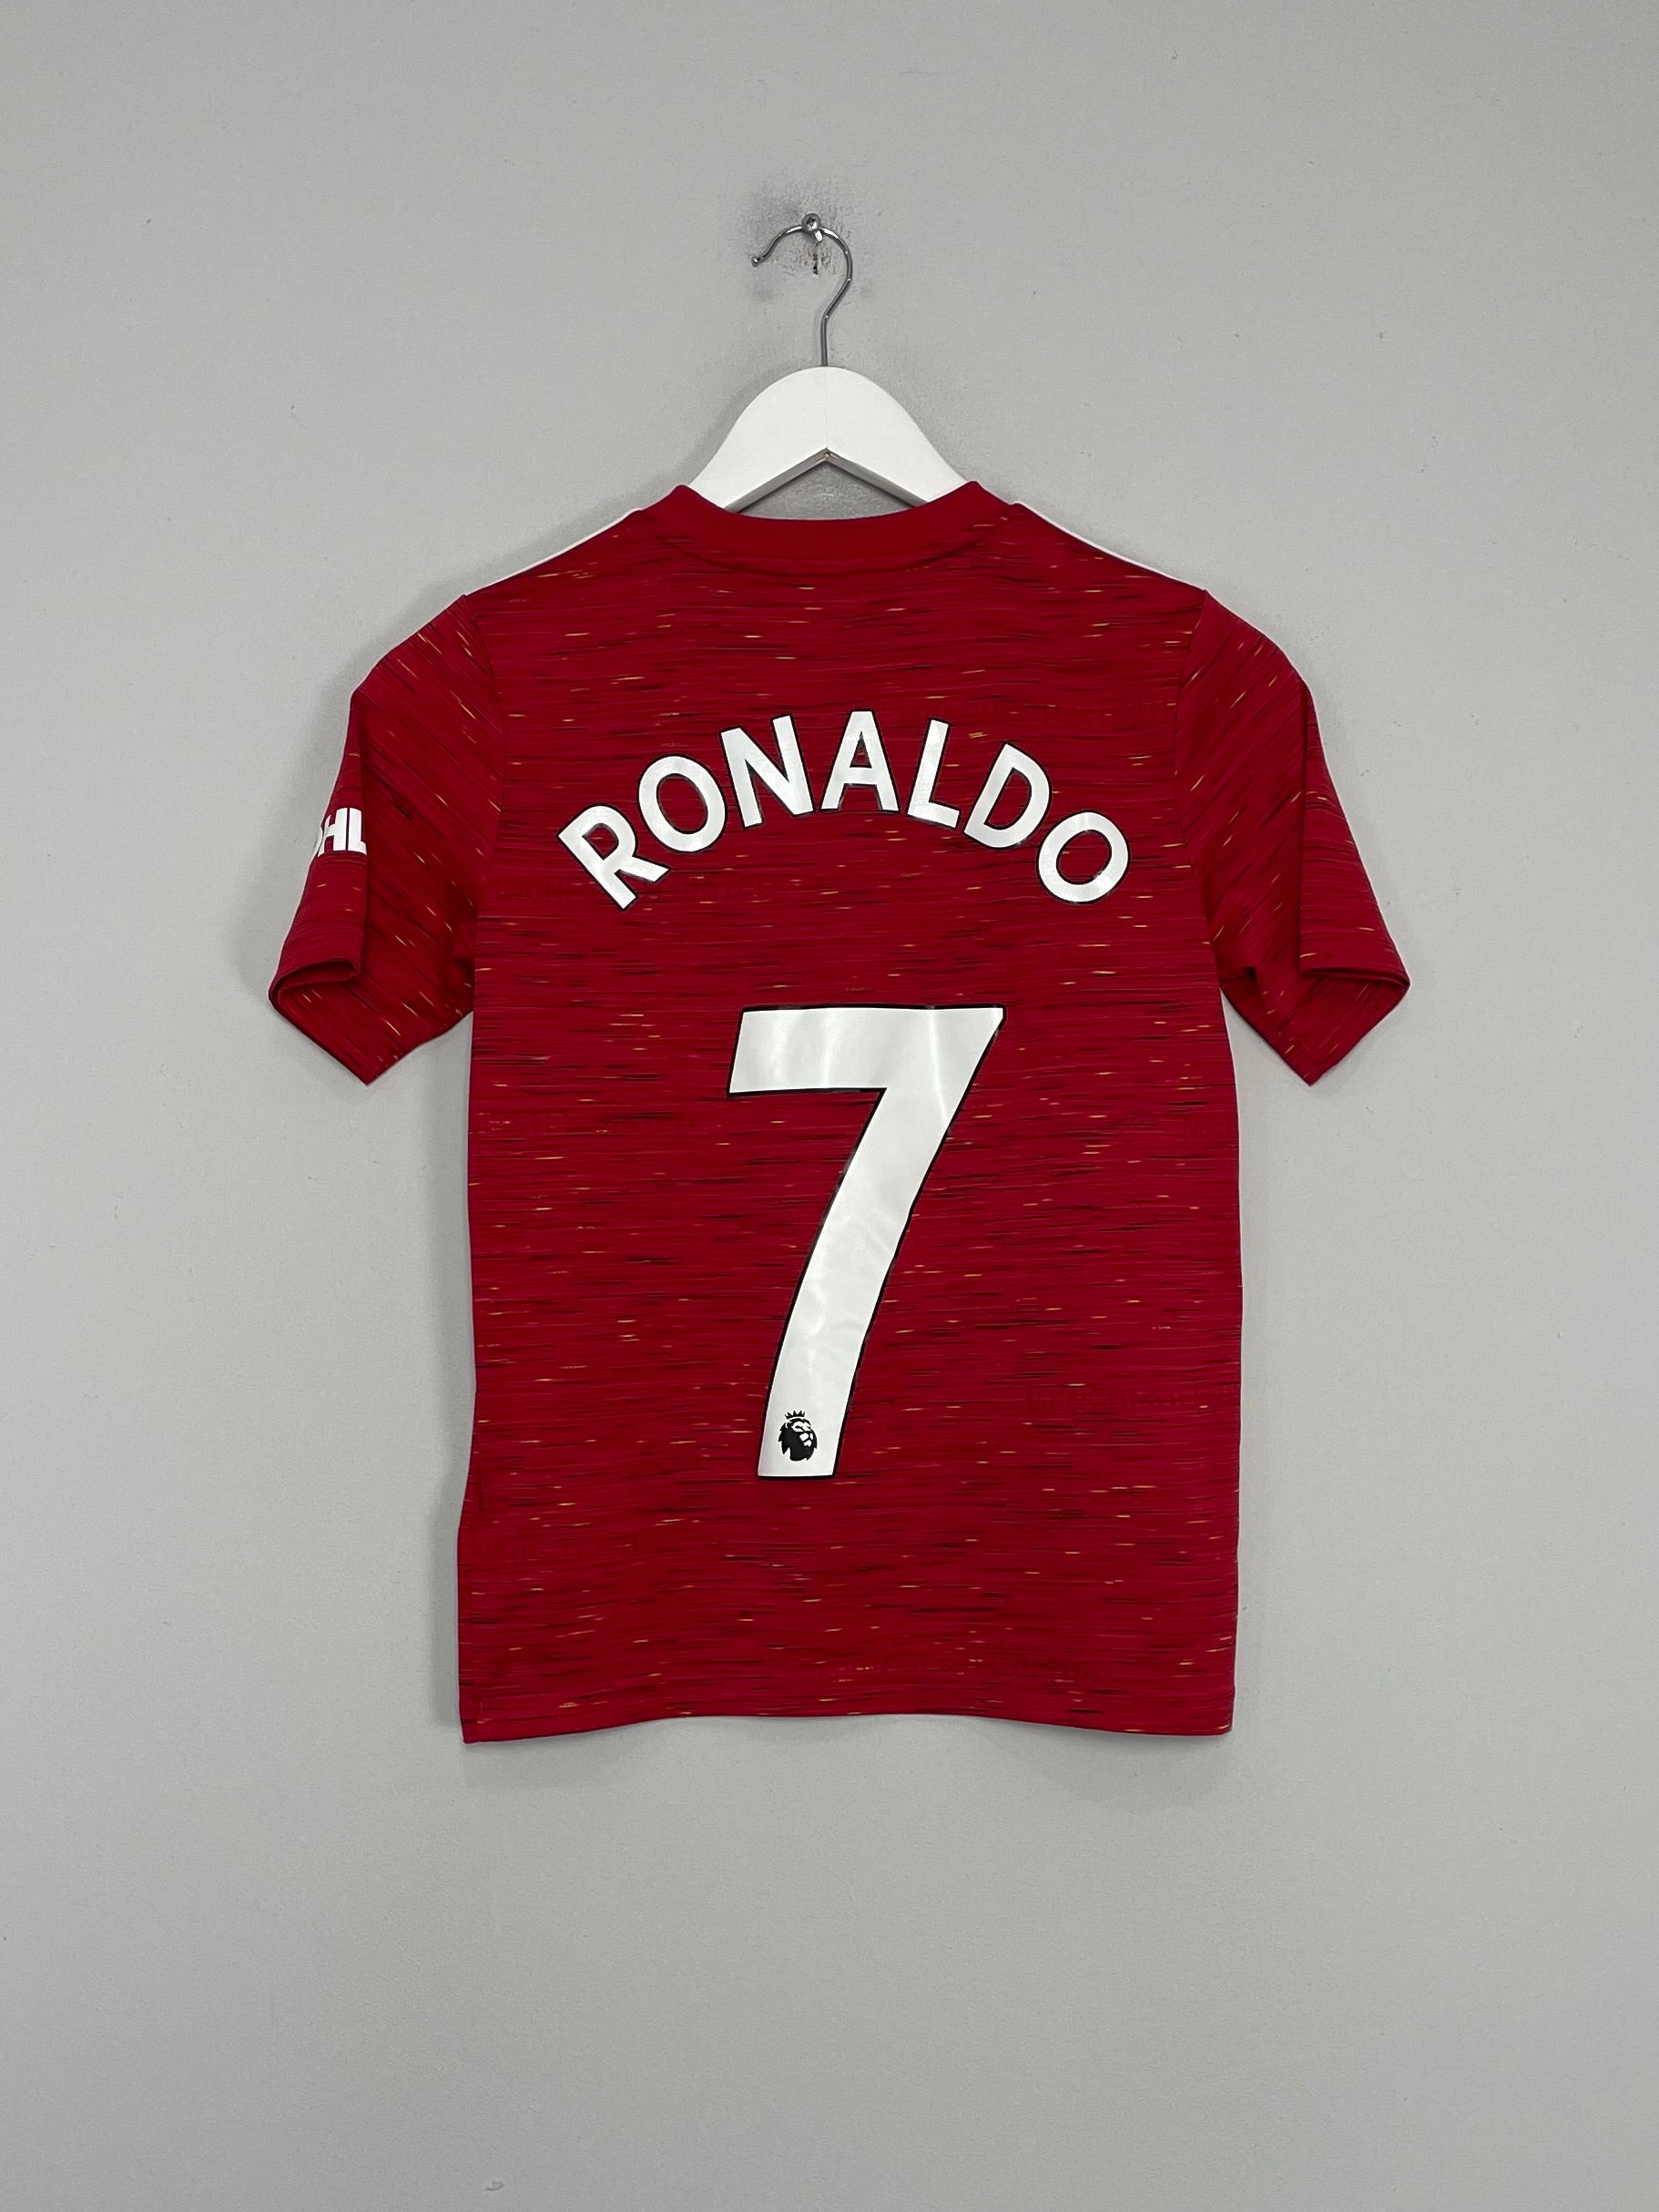 ronaldo youth jersey manchester united